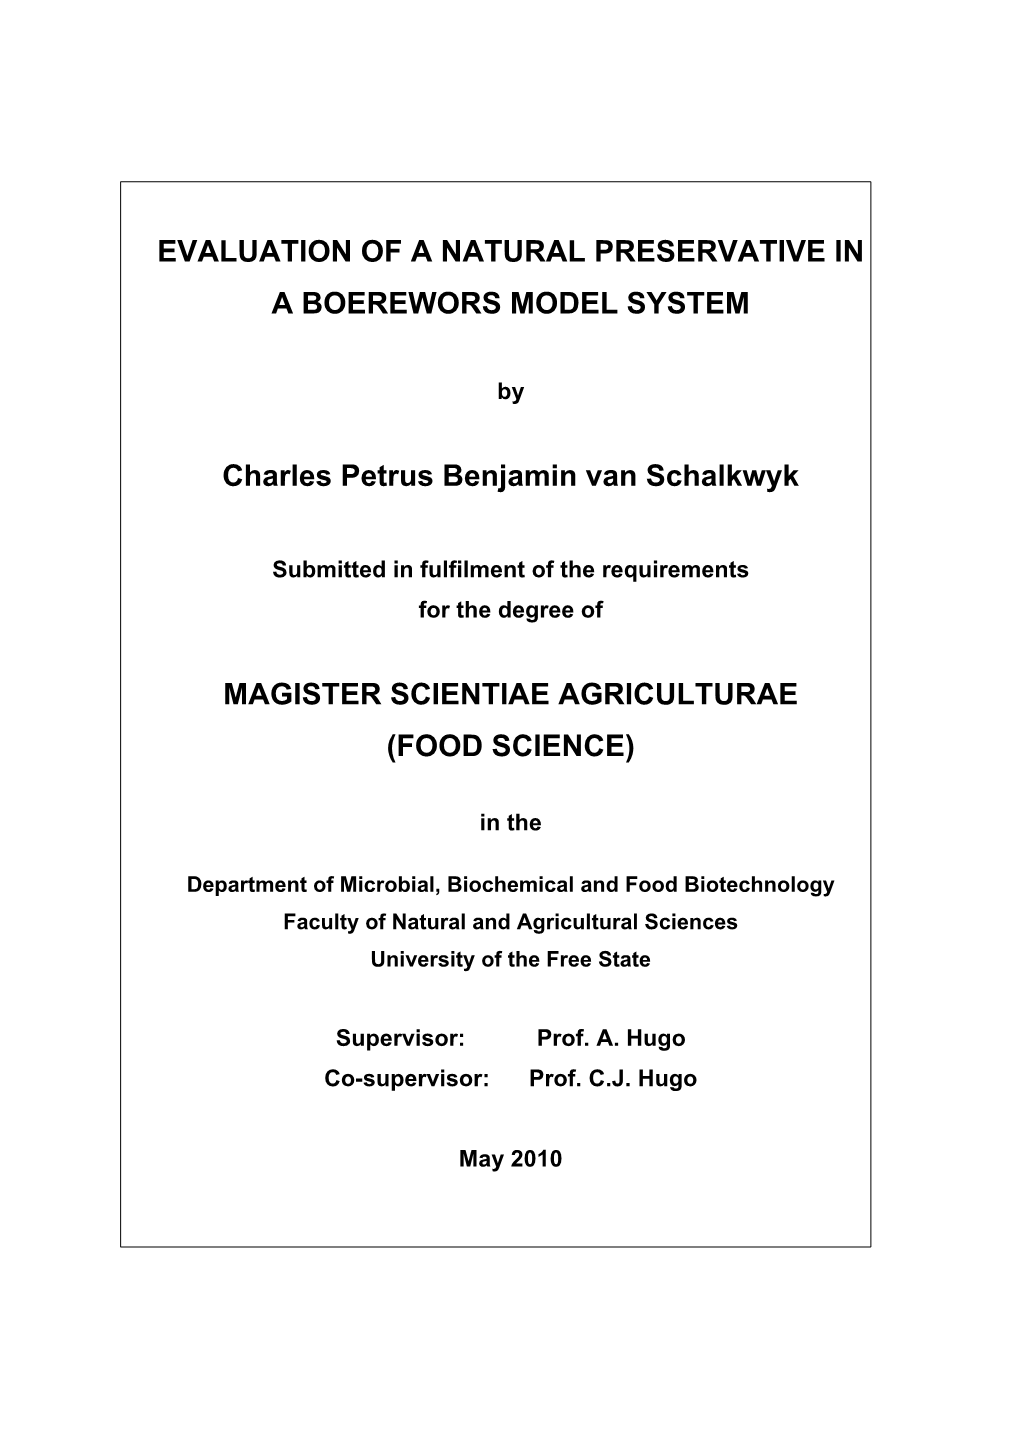 EVALUATION of a NATURAL PRESERVATIVE in a BOEREWORS MODEL SYSTEM Charles Petrus Benjamin Van Schalkwyk MAGISTER SCIENTIAE AGRICU